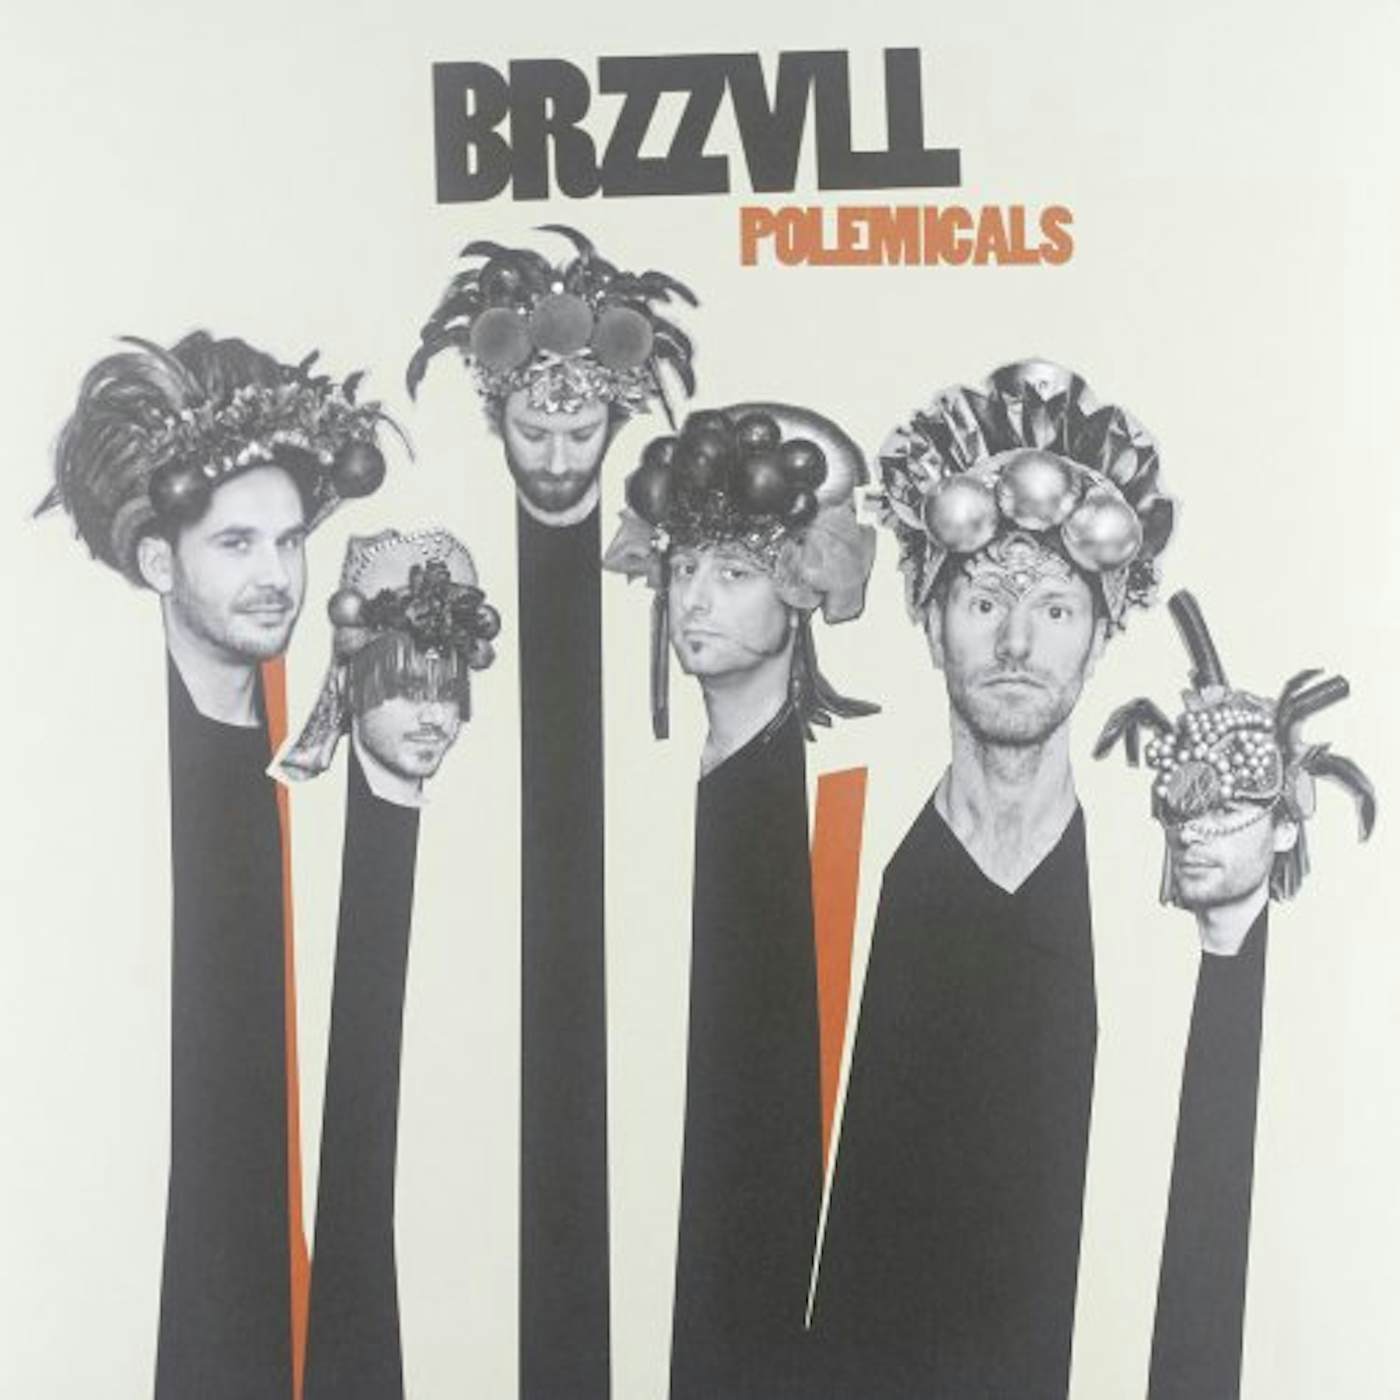 BRZZVLL Polemicals Vinyl Record